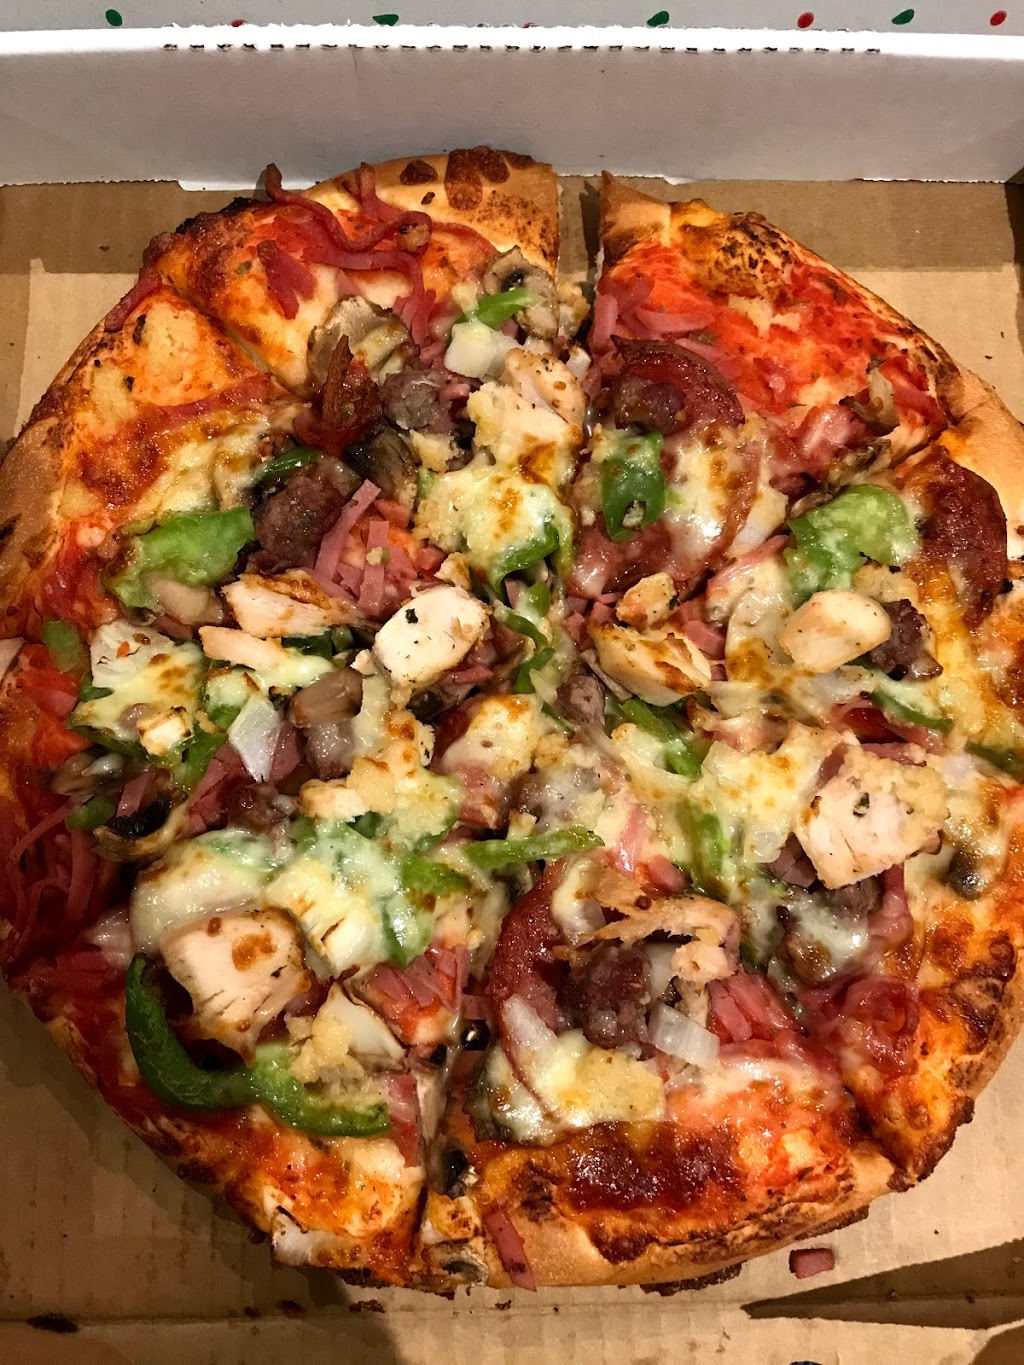 T-Mans Pizza | 2/287 Boronia Rd, Boronia VIC 3155, Australia | Phone: (03) 9762 4633